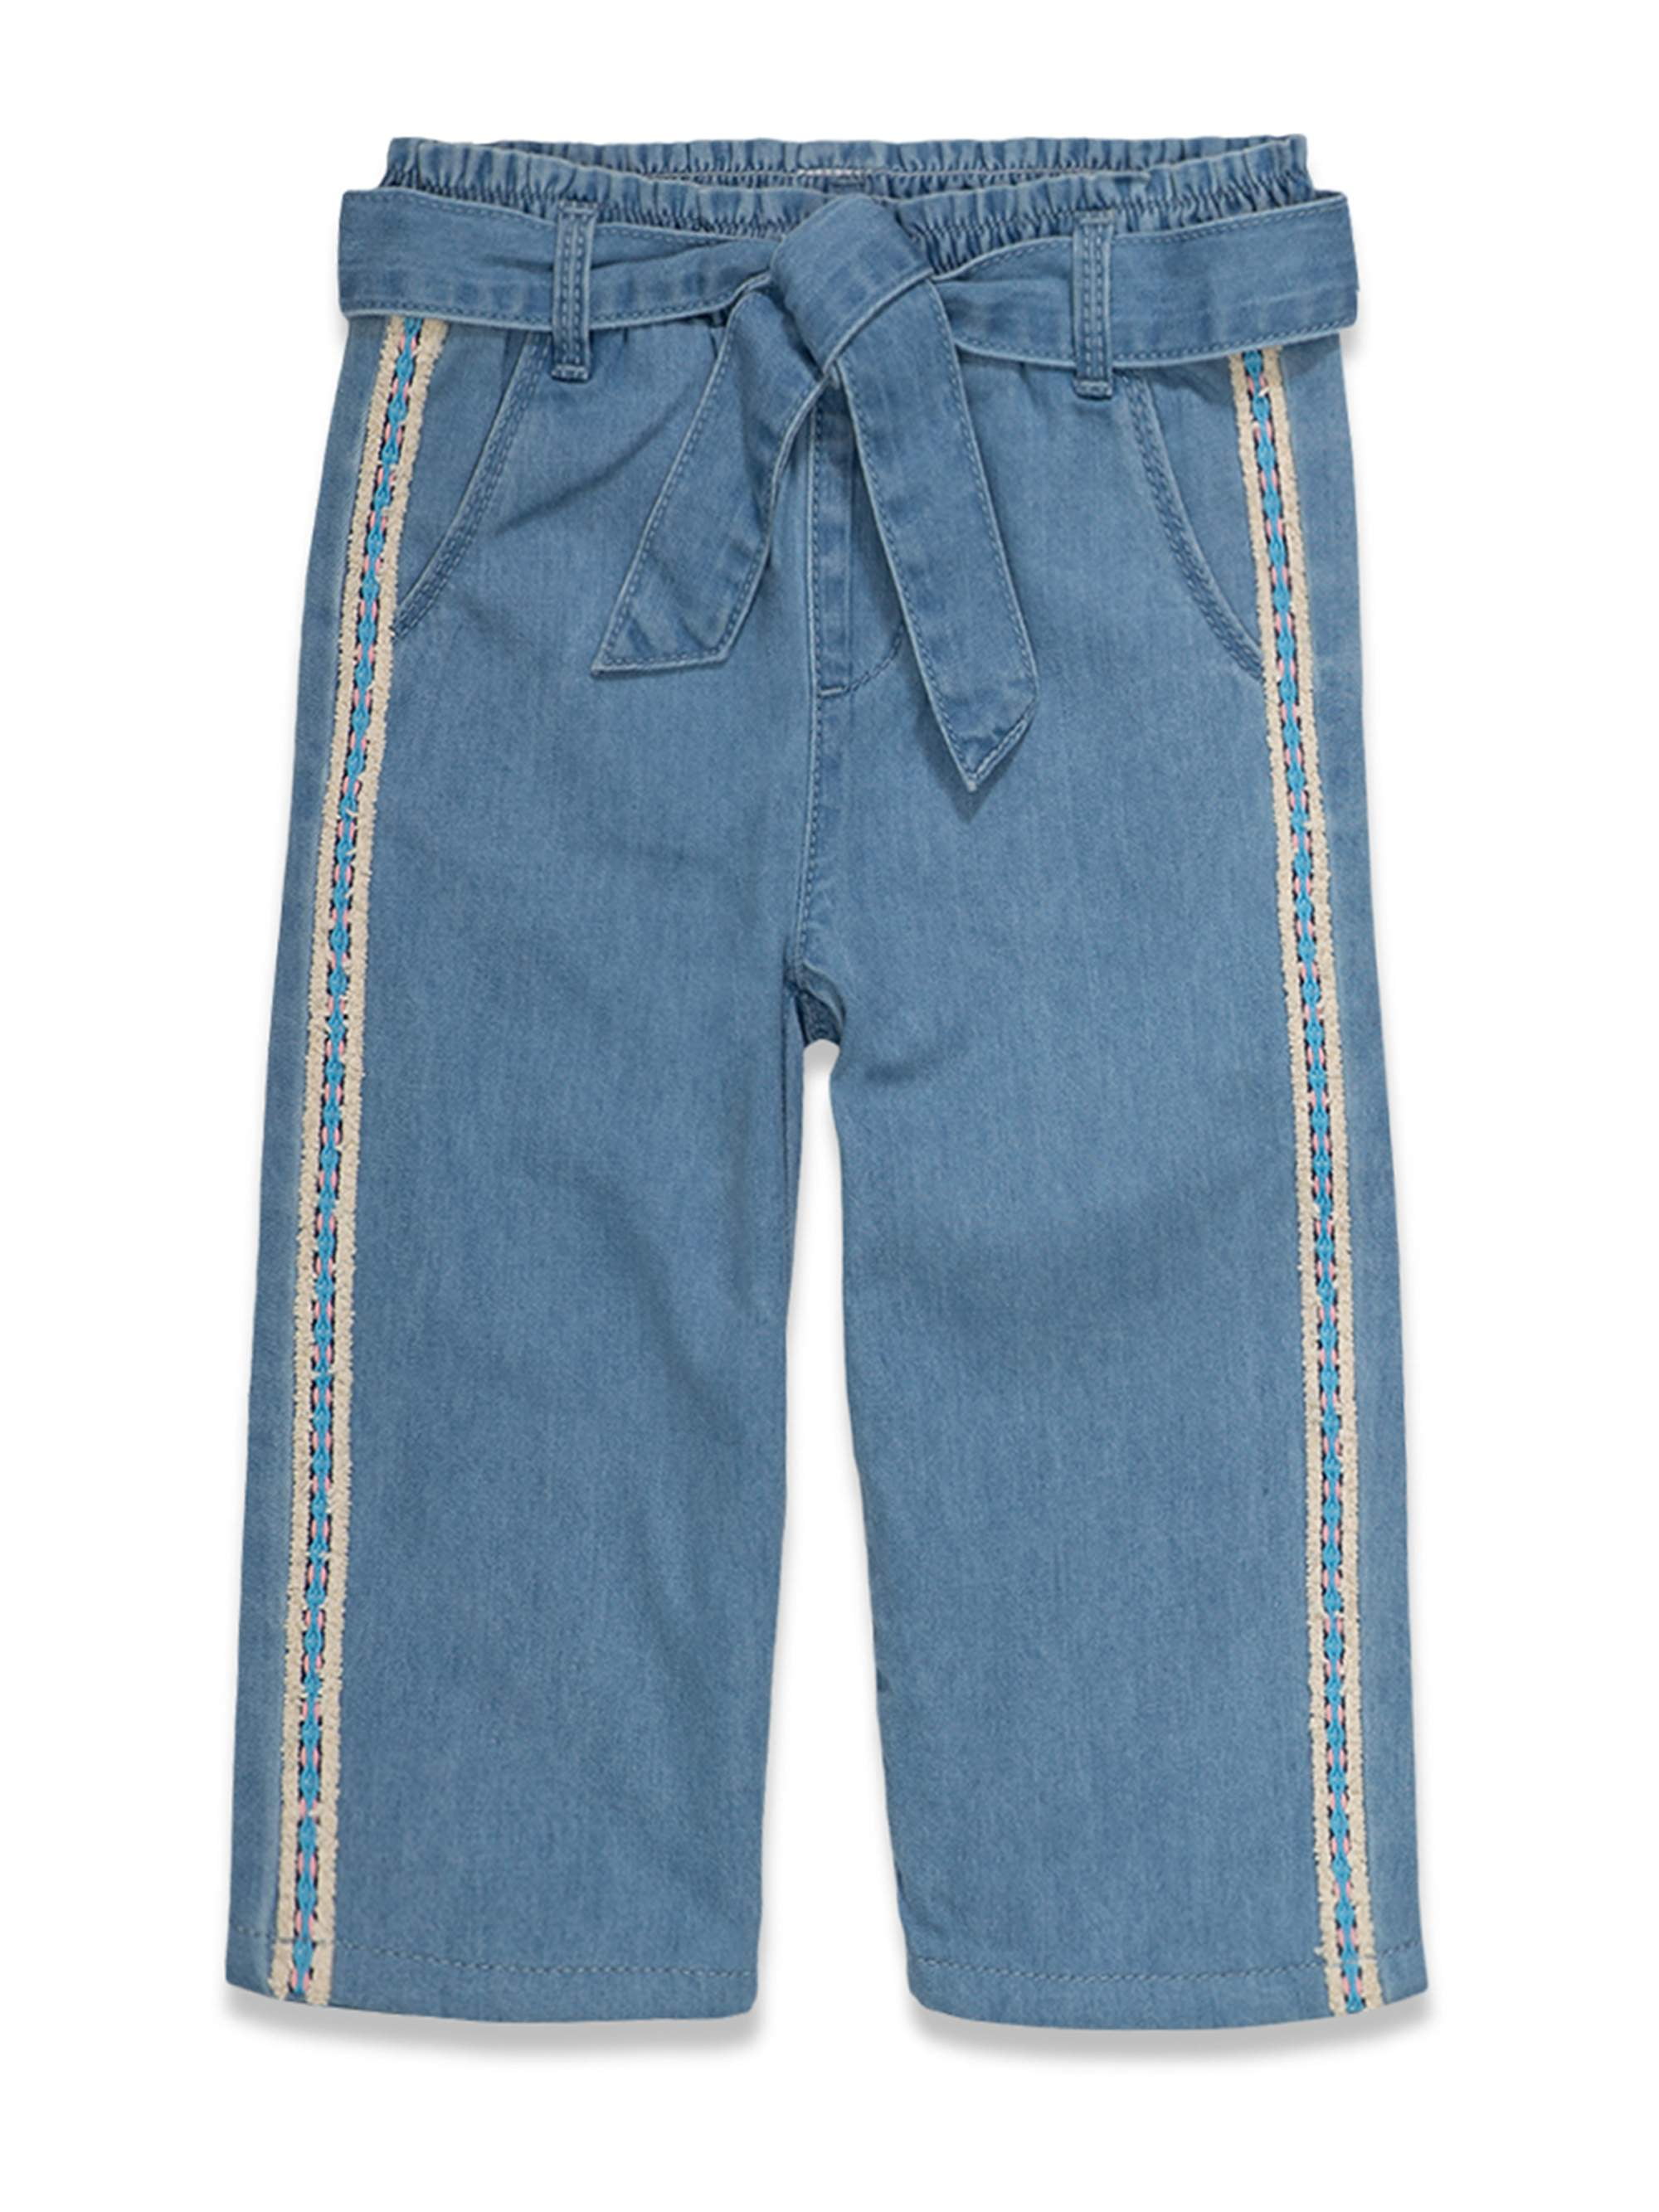 NEW Jessica Simpson blue denim distressed roll cuff shorts girl 3T MSRP $29.50 